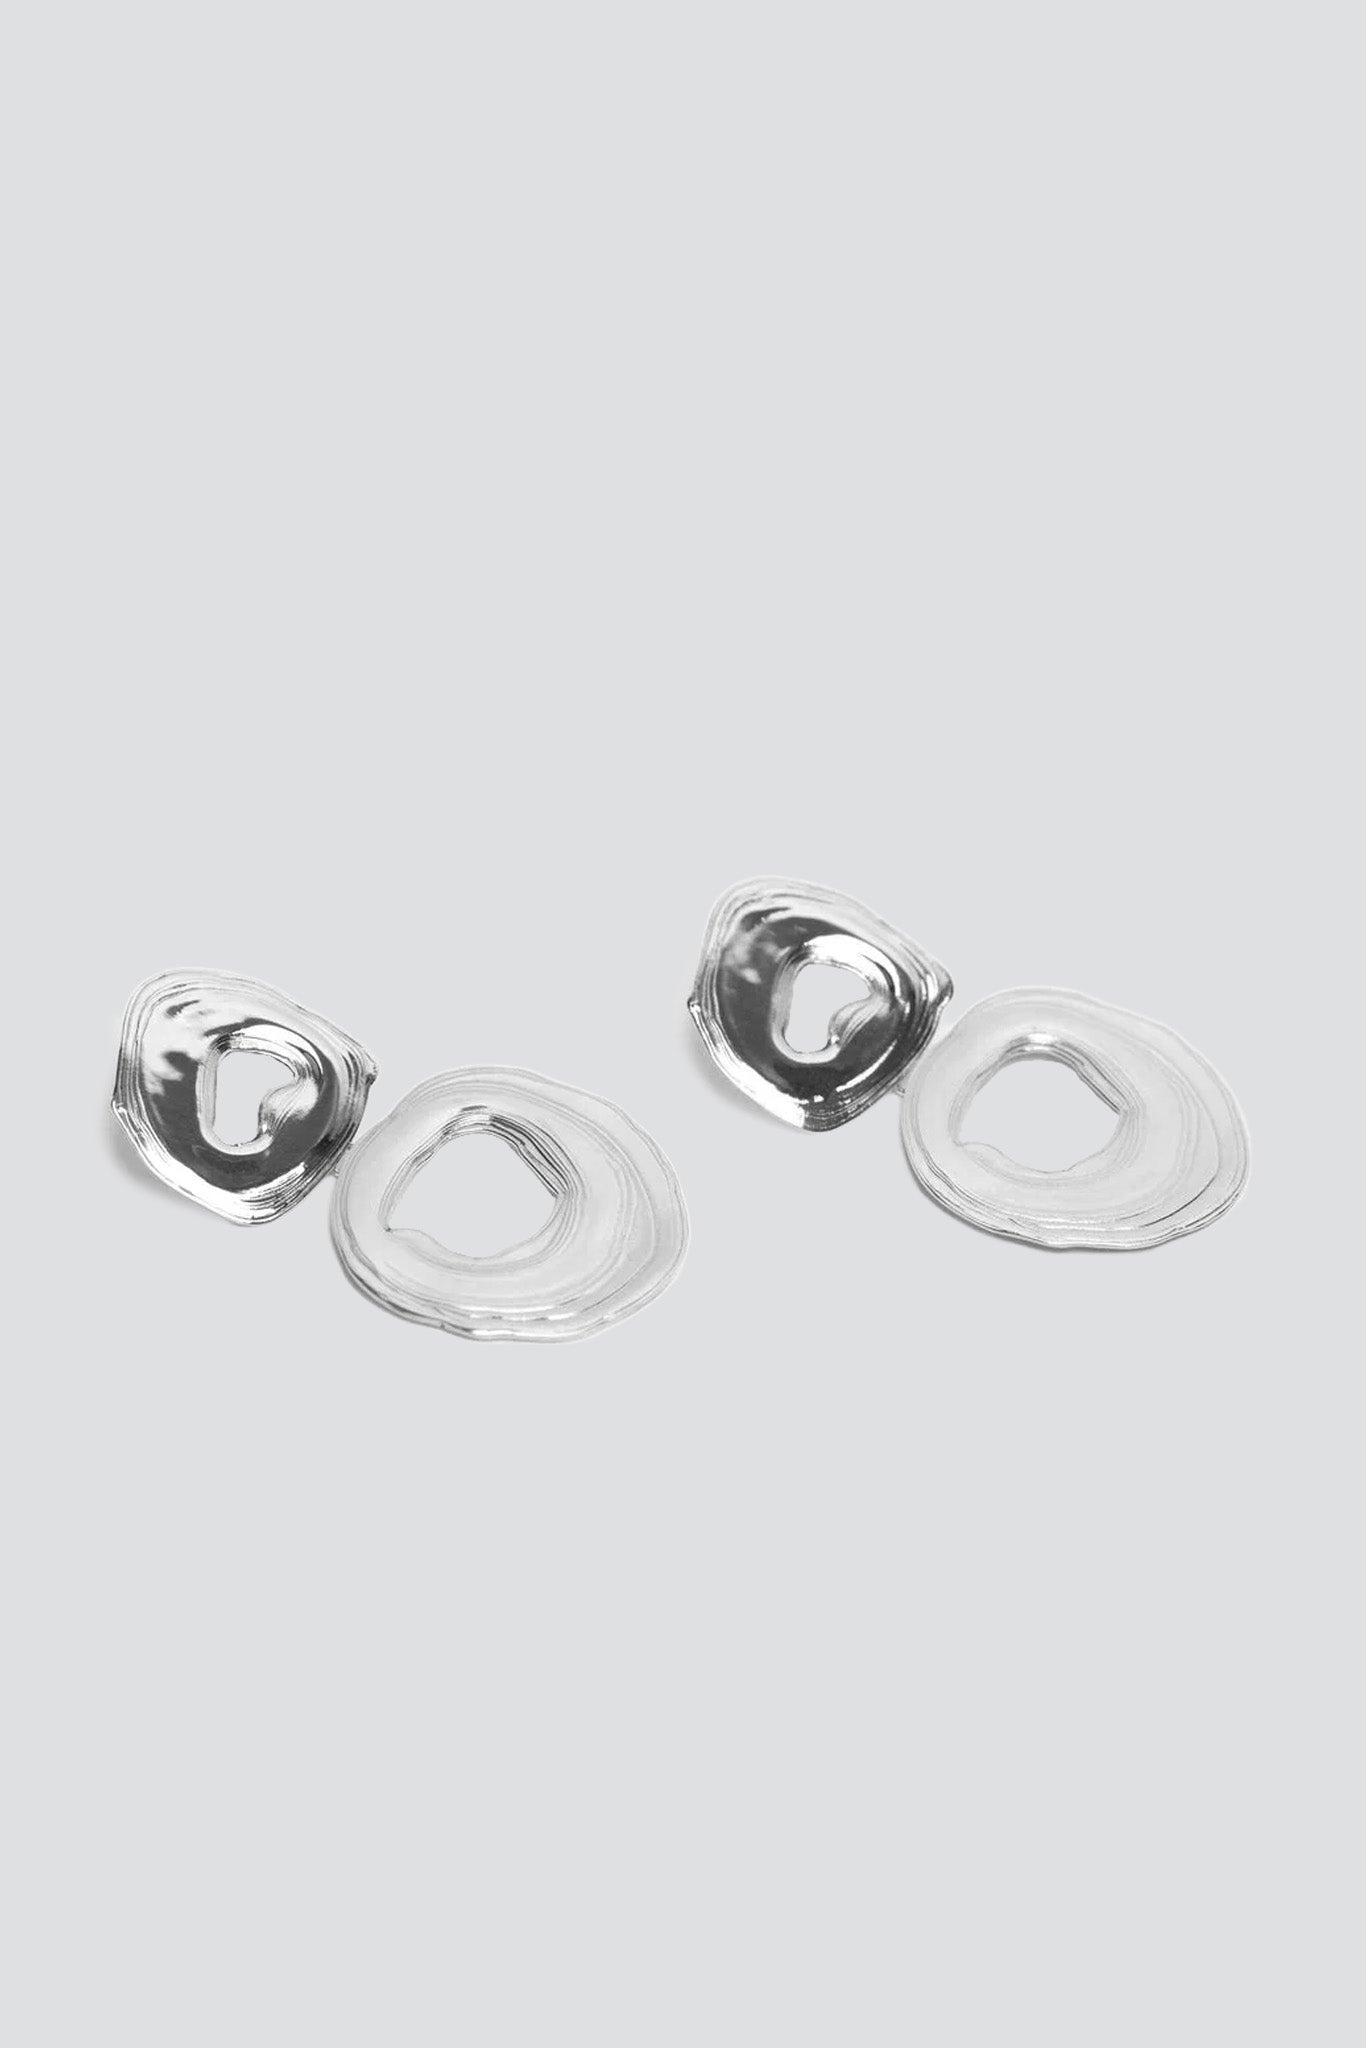 White Bronze Double Whirlpool Earrings